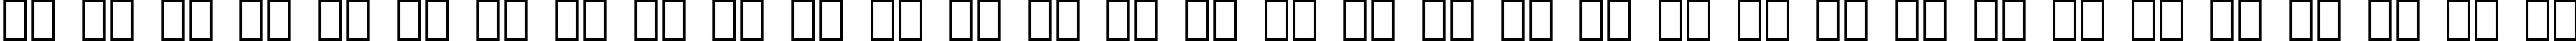 Пример написания русского алфавита шрифтом Square 721 Bold Extended BT